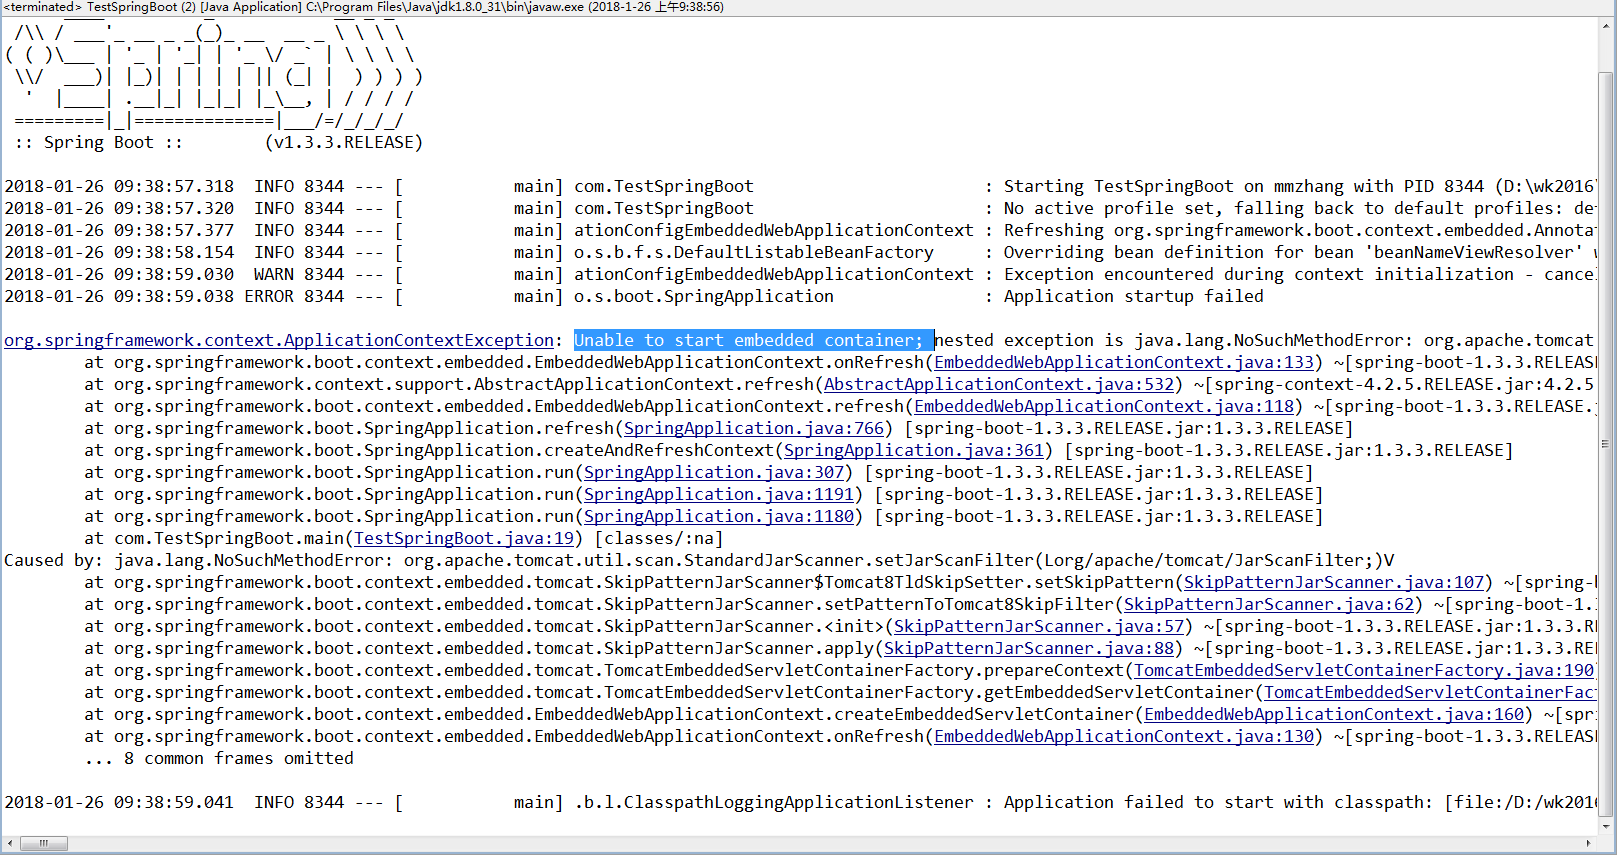 关于新建SpringBoot项目添加Myeclipse Service Library 之后项目就报错Unable to start embedded container;